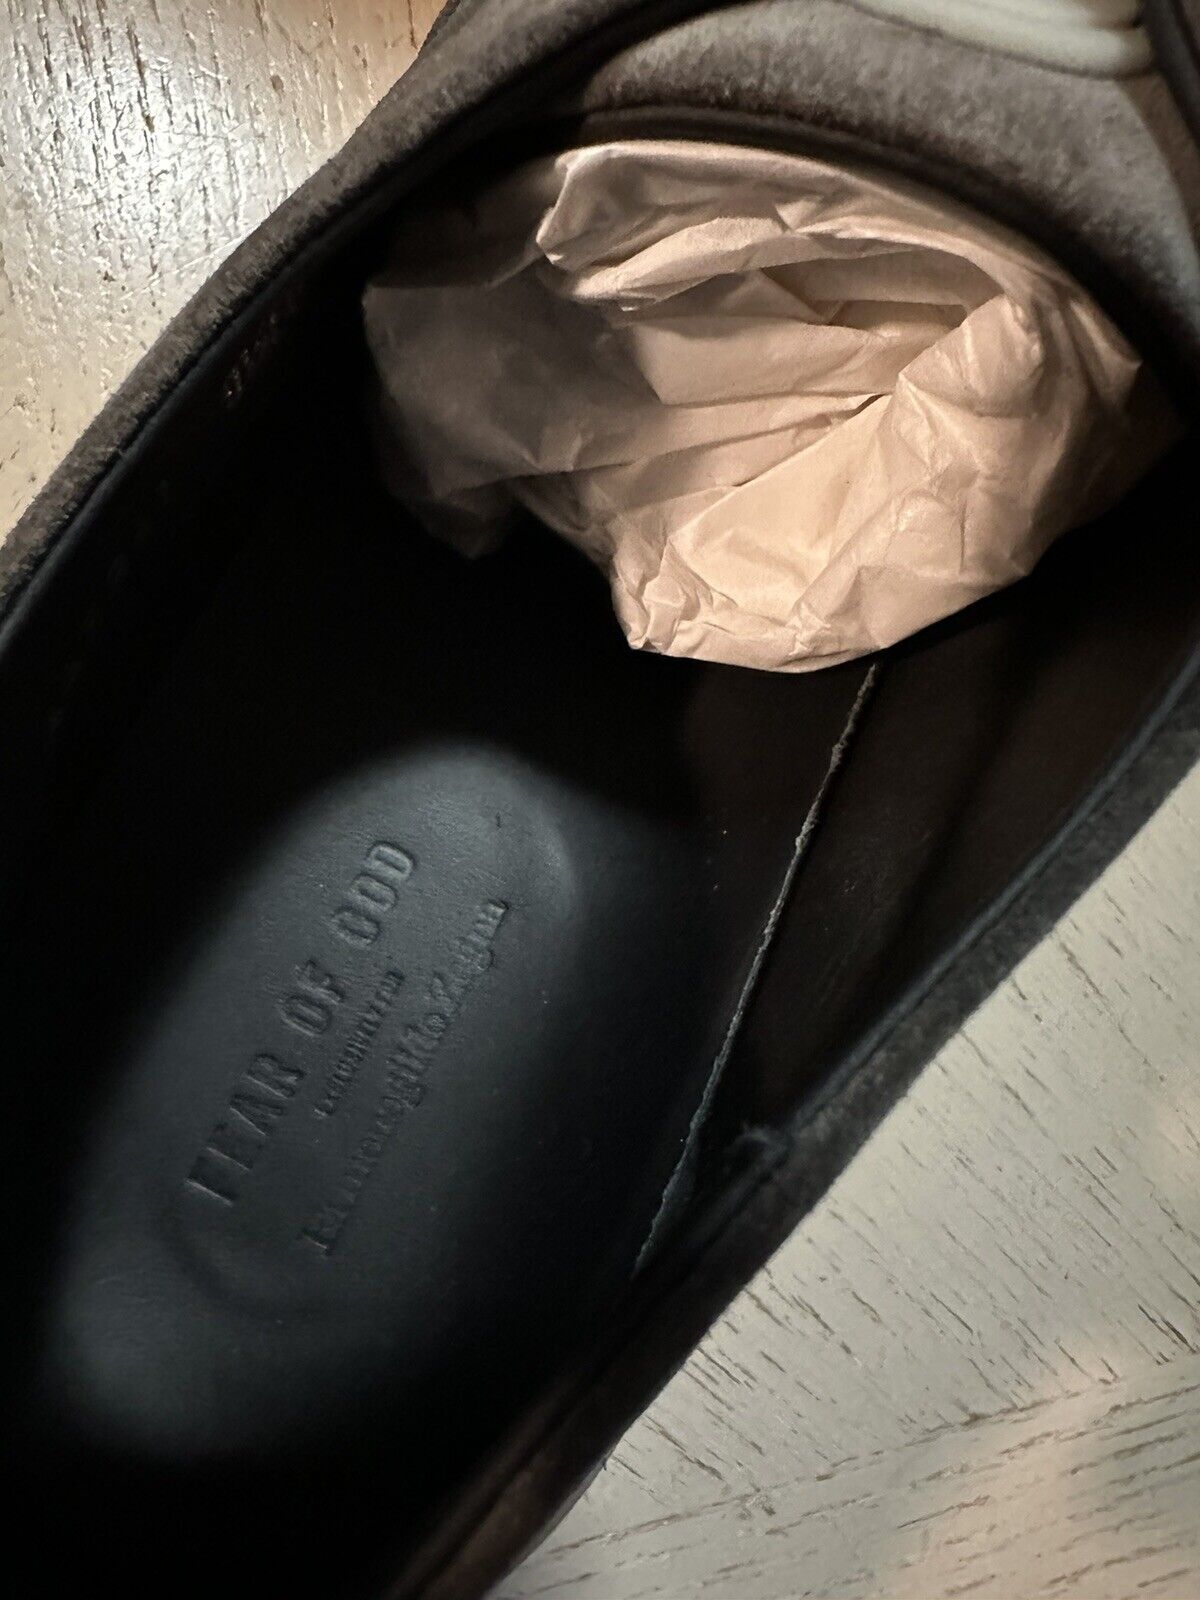 New $595 Ermenegildo Zegna Suede/Leather Sneakers Shoes DK Gray 14 US